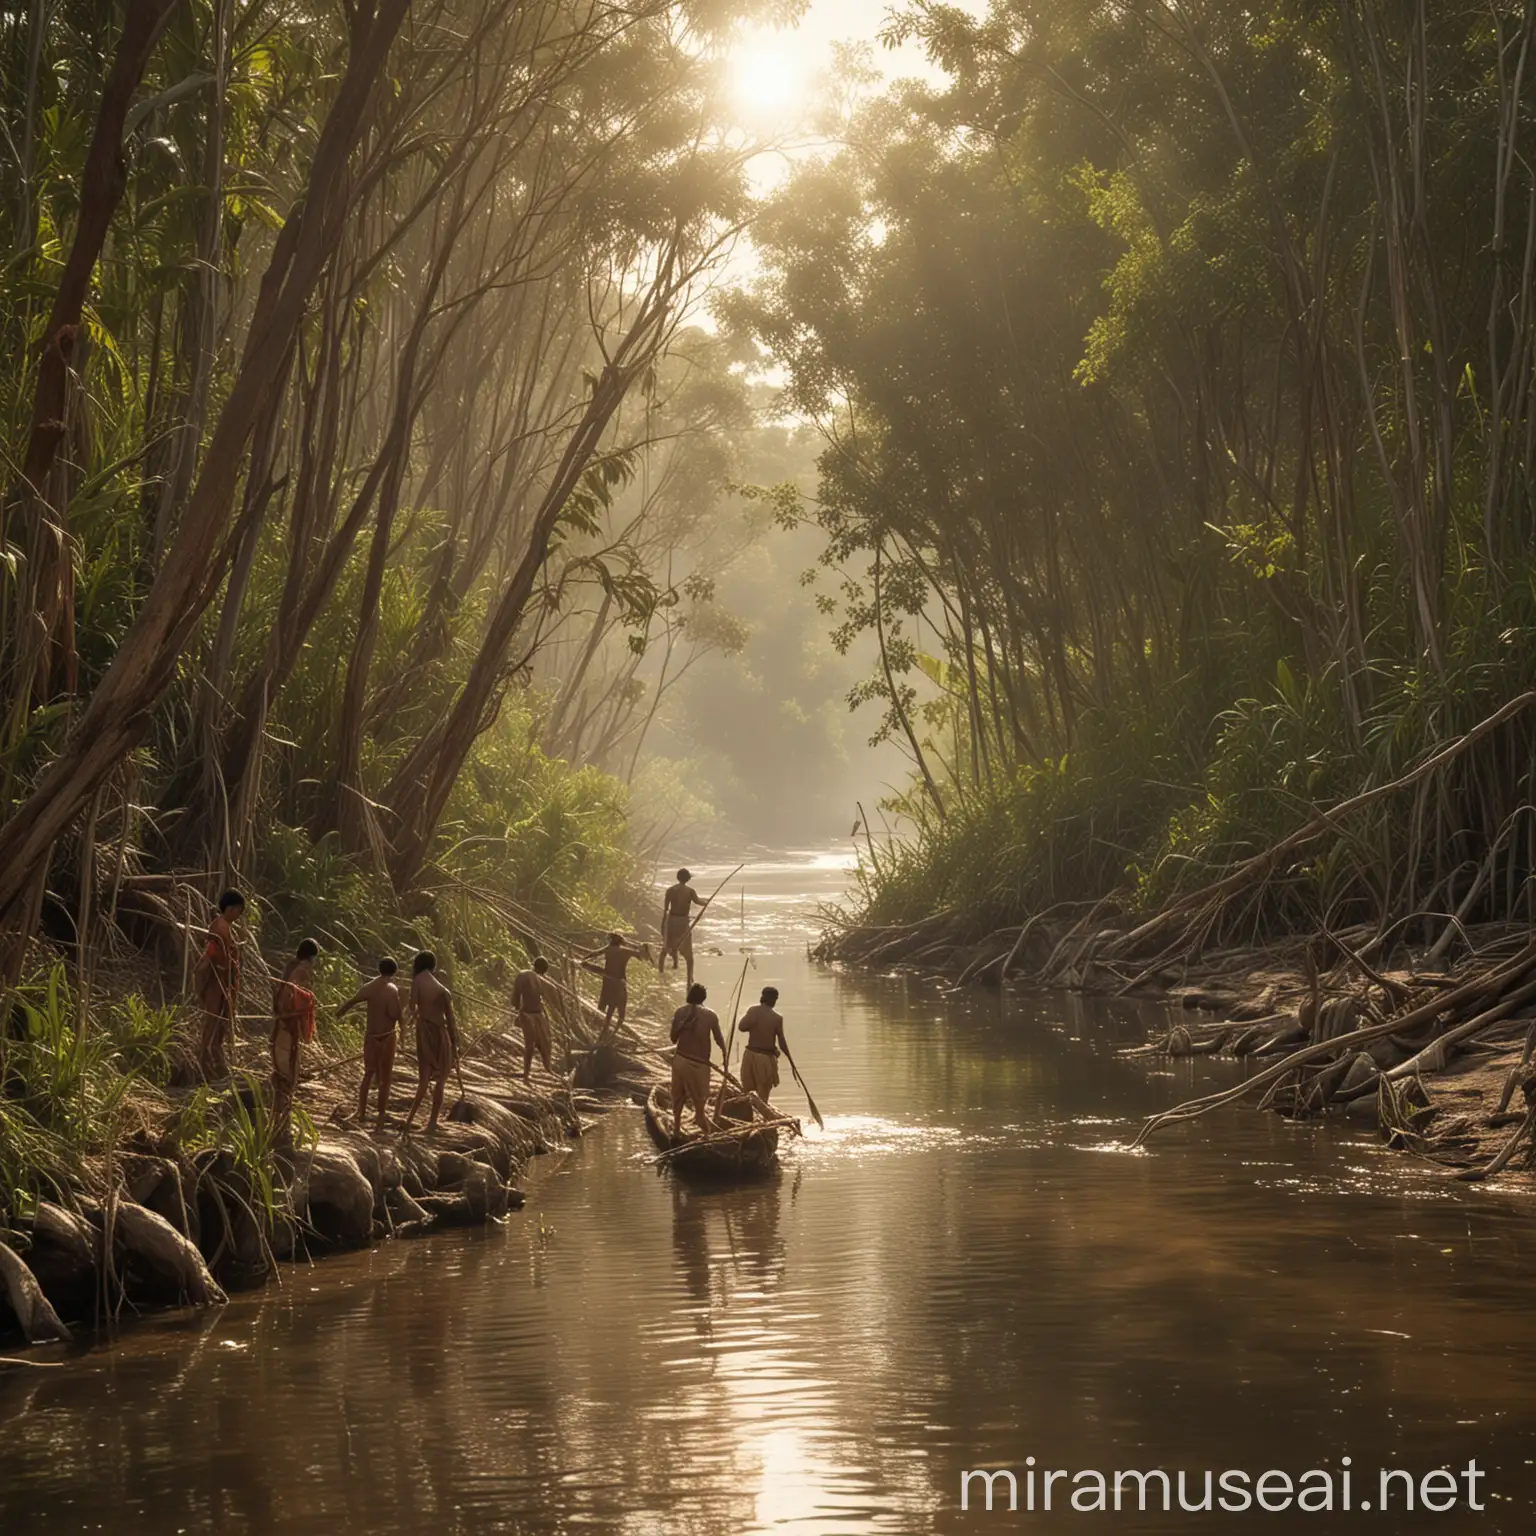 Aboriginal Comechingones People Fishing in Calm River at Sunrise